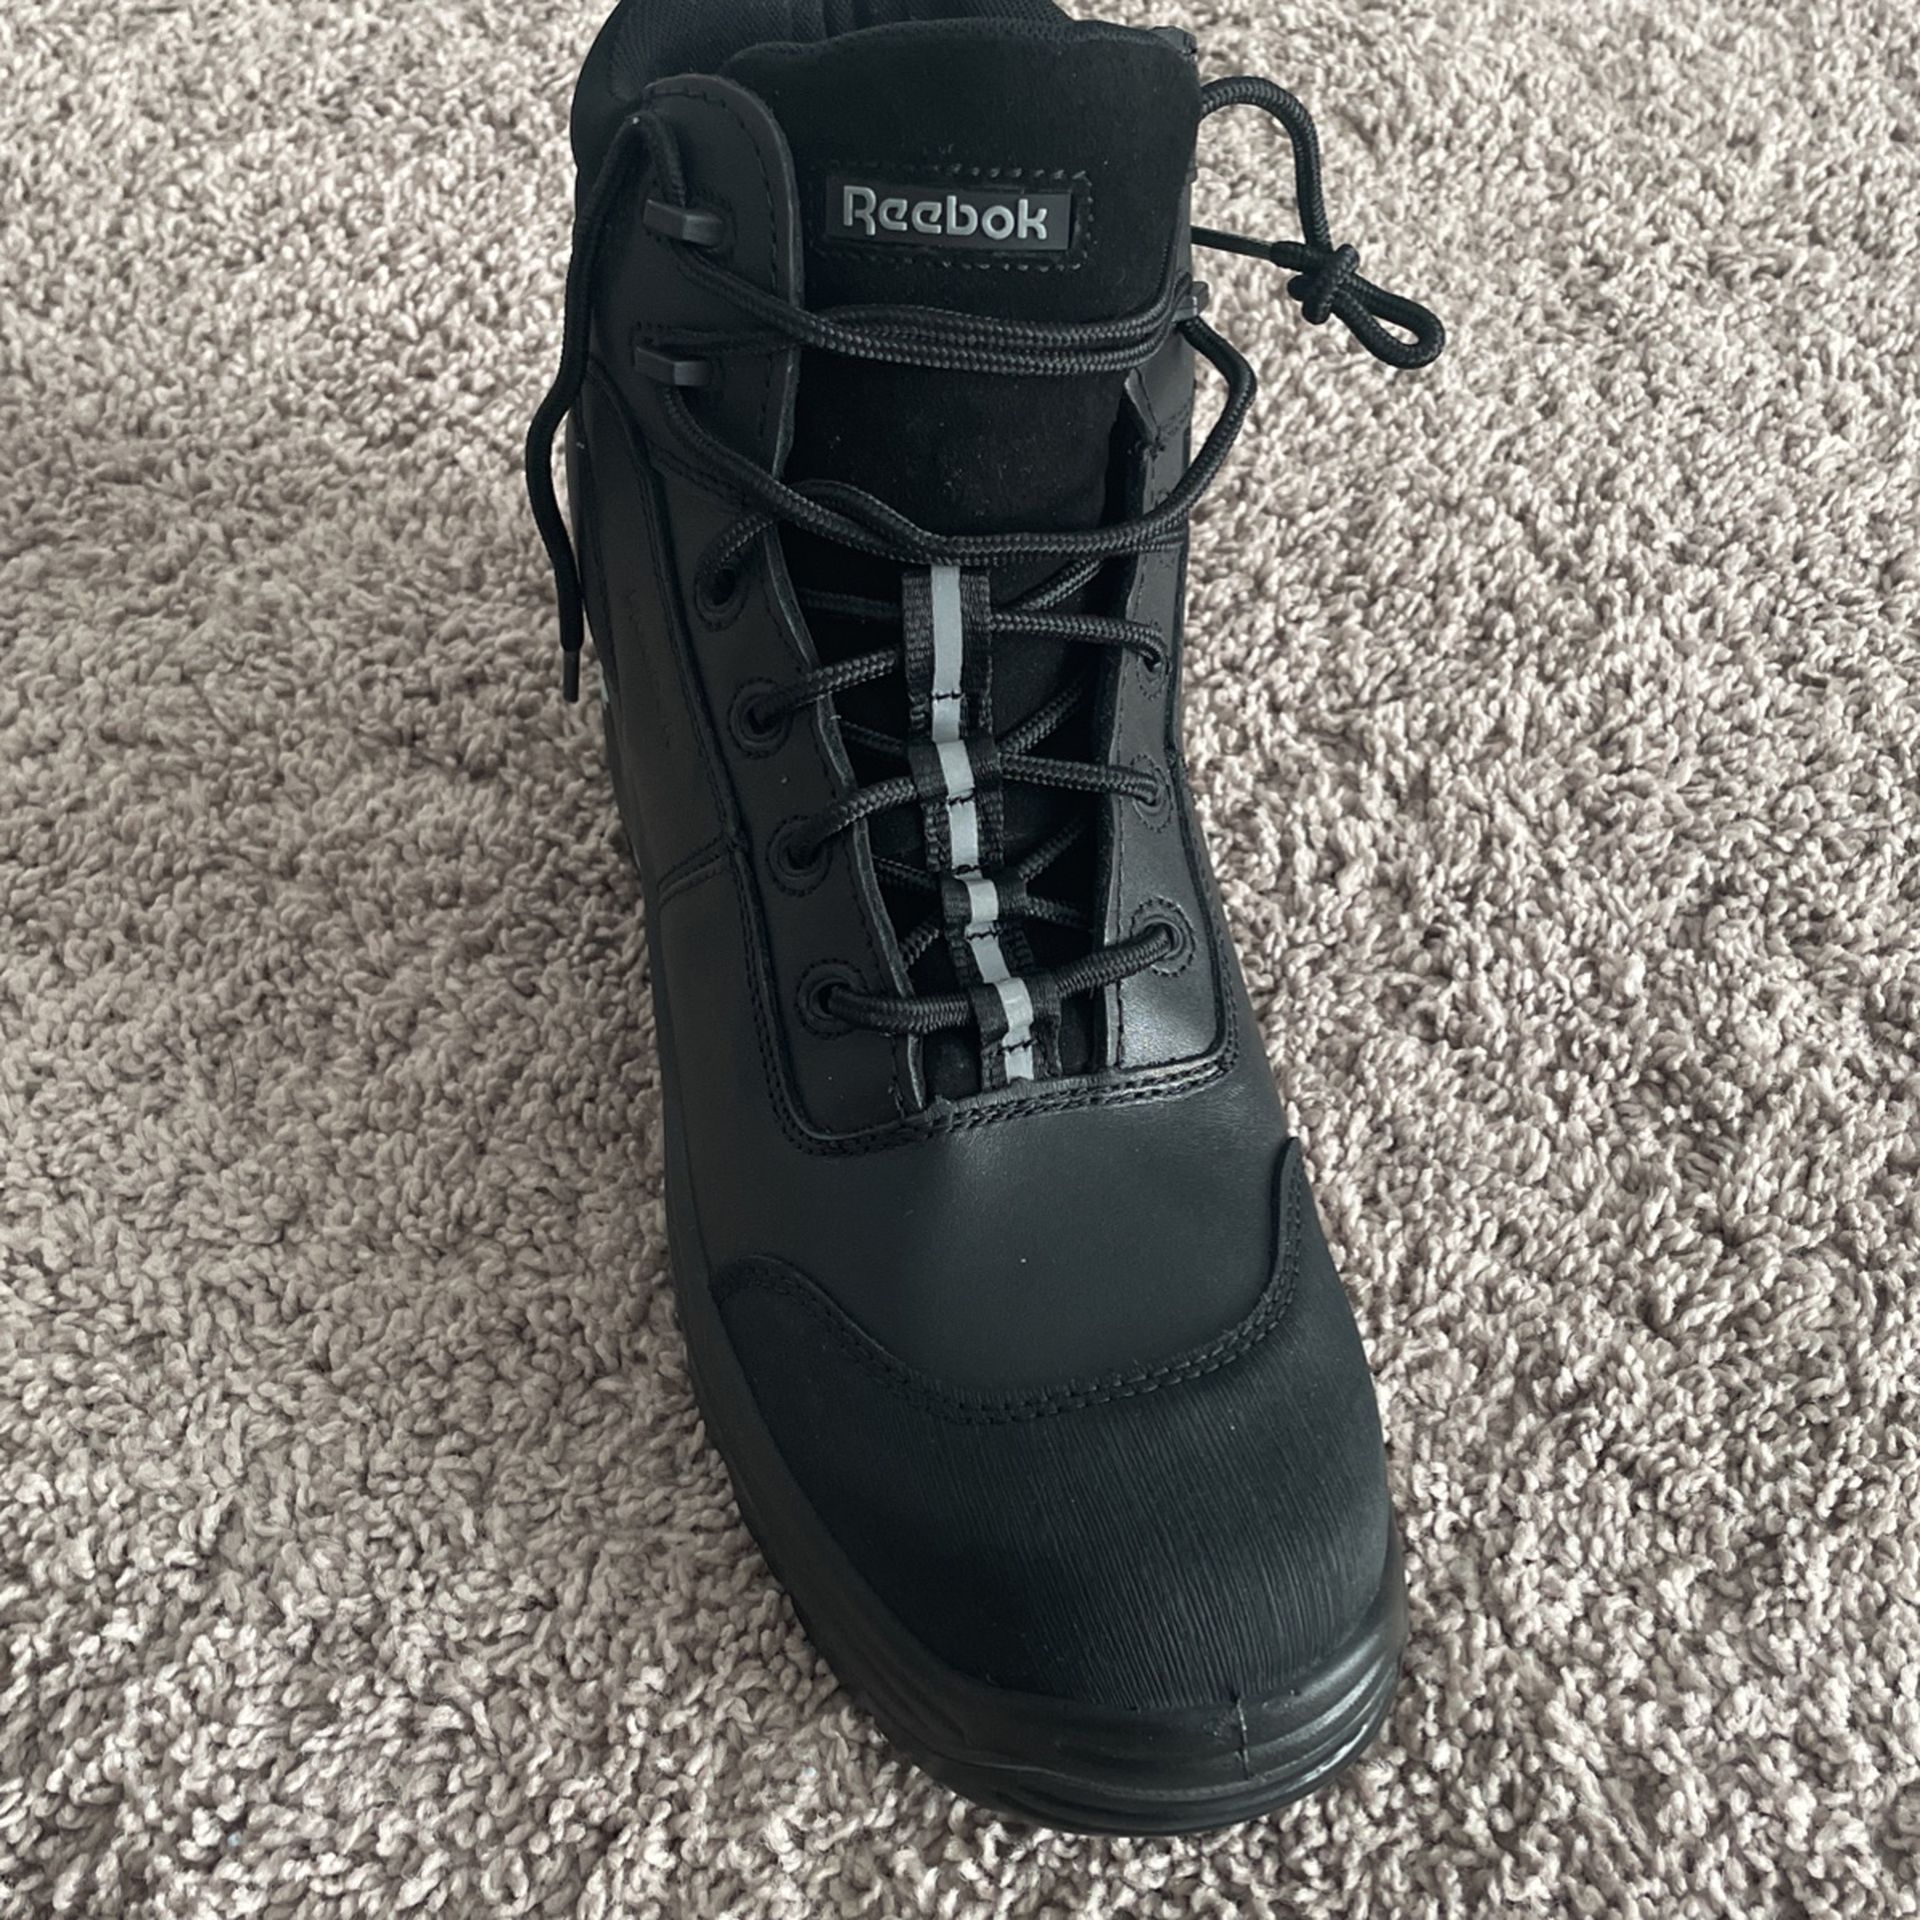 New Reebok Work boots Size 12